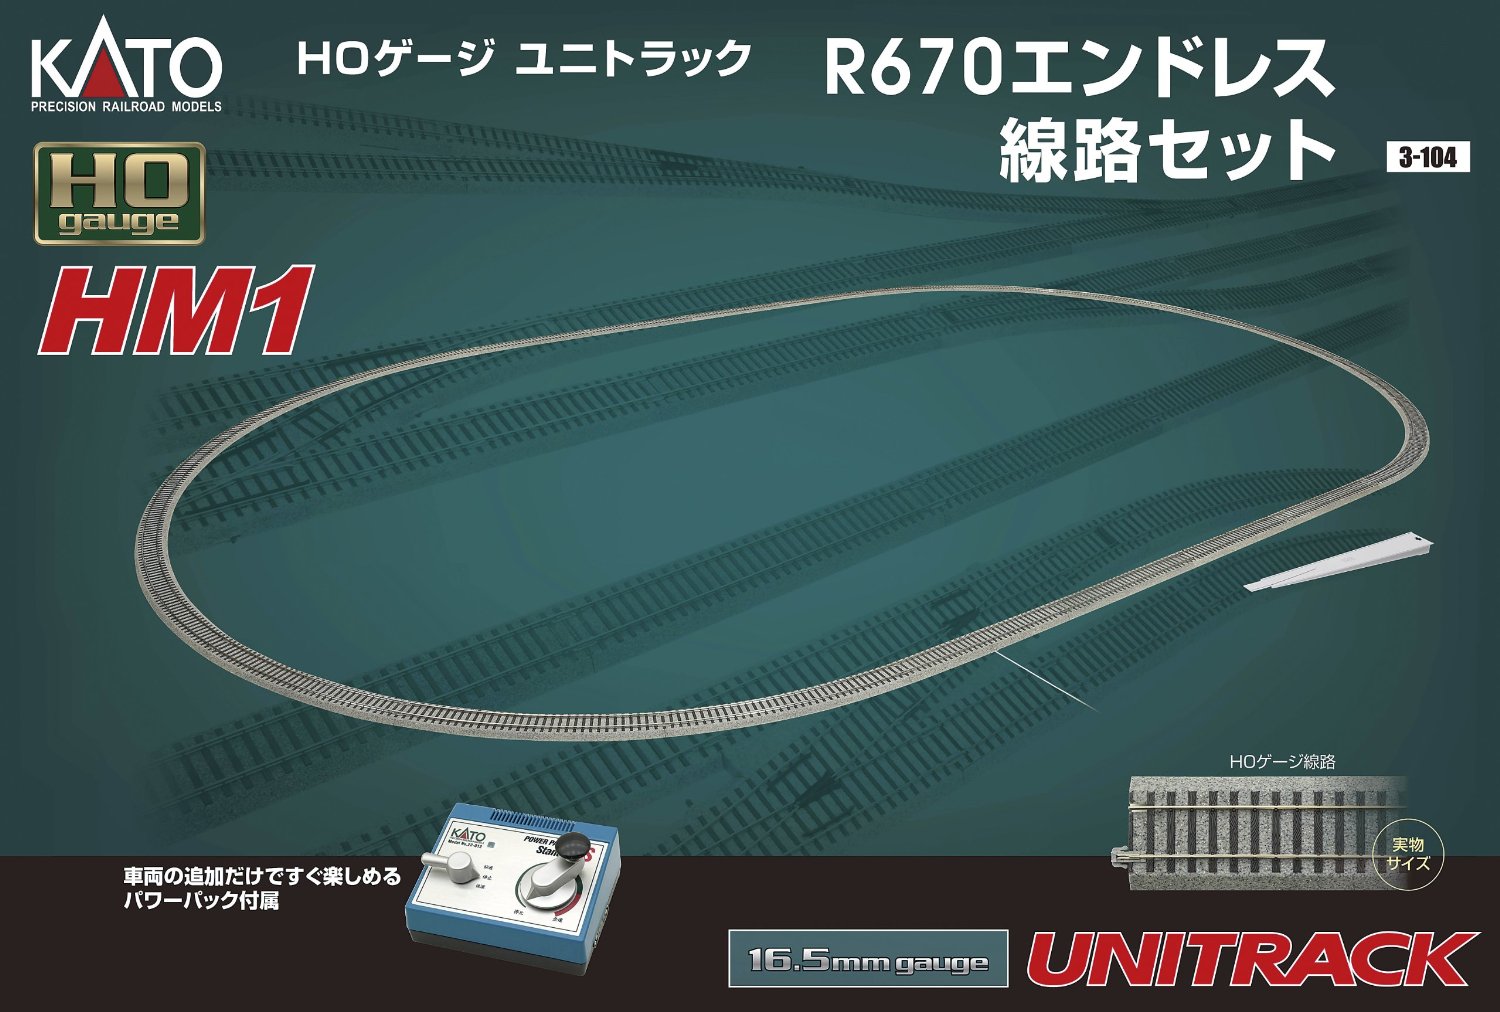 3-104 Unitrack [HM1] R670 Endless Track Set (HO Master1)